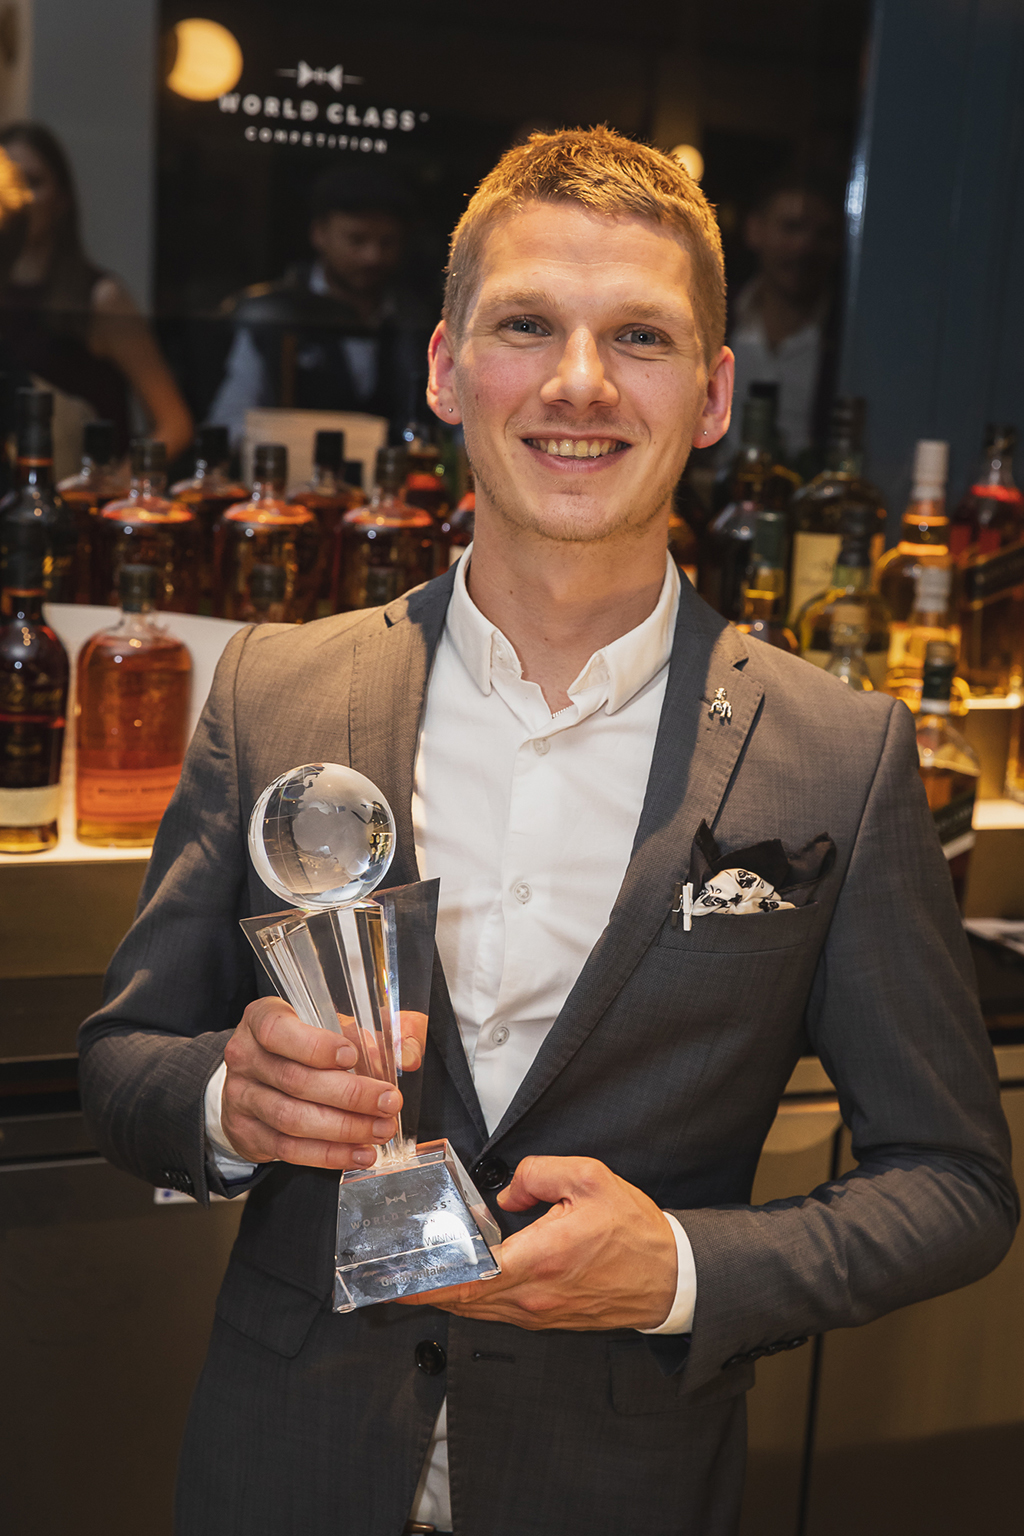 Daniel Warren was named Diageo Reserve World Class GB Bartender of the Year 2018